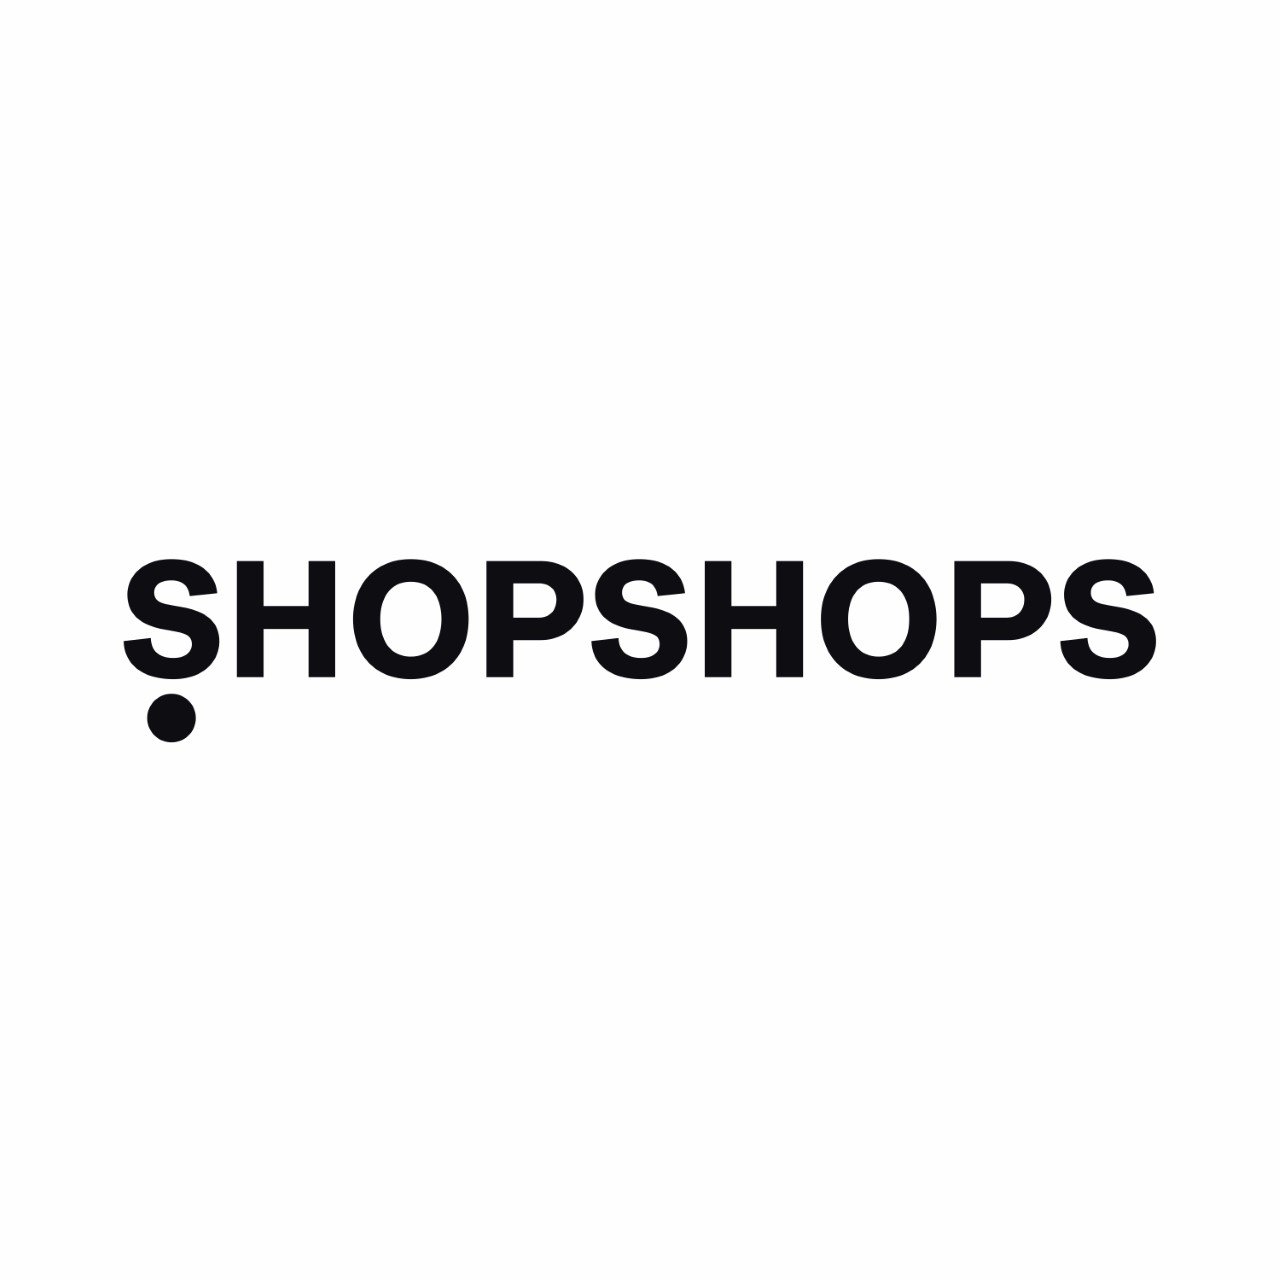 ShopShops-SoftwareandApps-19937313_ShopShops_Logo_-_White.jpeg